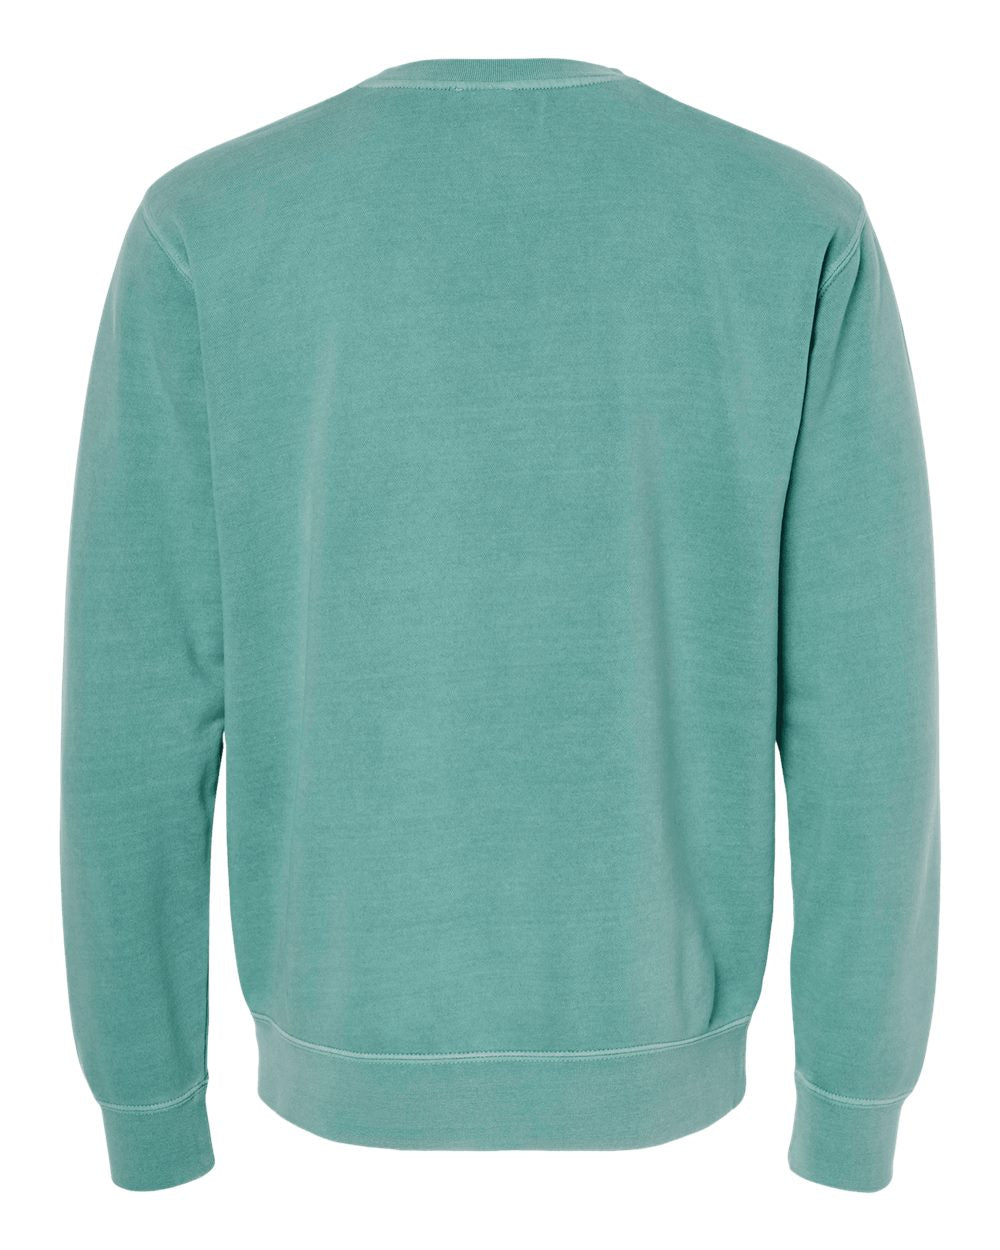 Unisex Midweight Pigment-Dyed Crewneck Sweatshirt